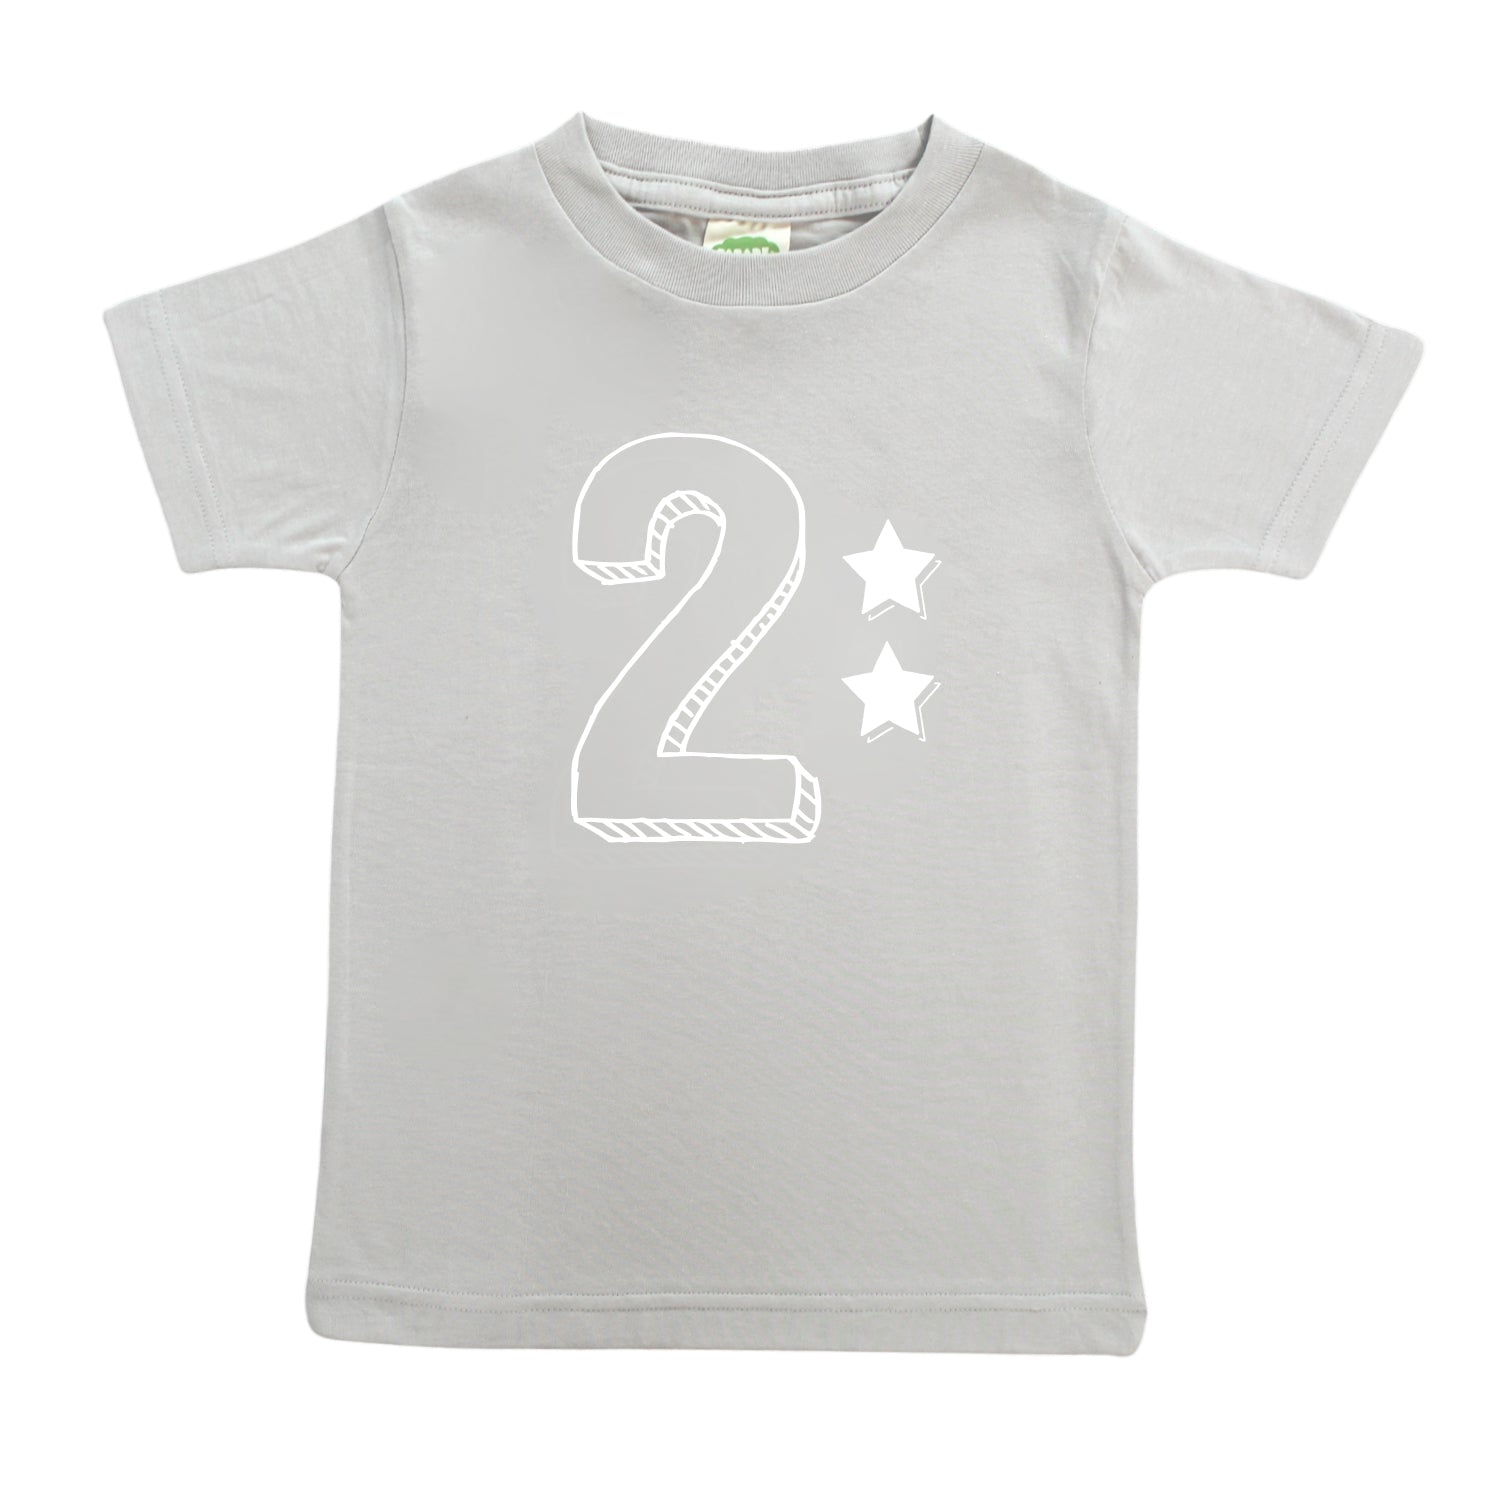 Birthday T-shirts - Organic Baby Clothes, Kids Clothes, & Gifts | Parade Organics